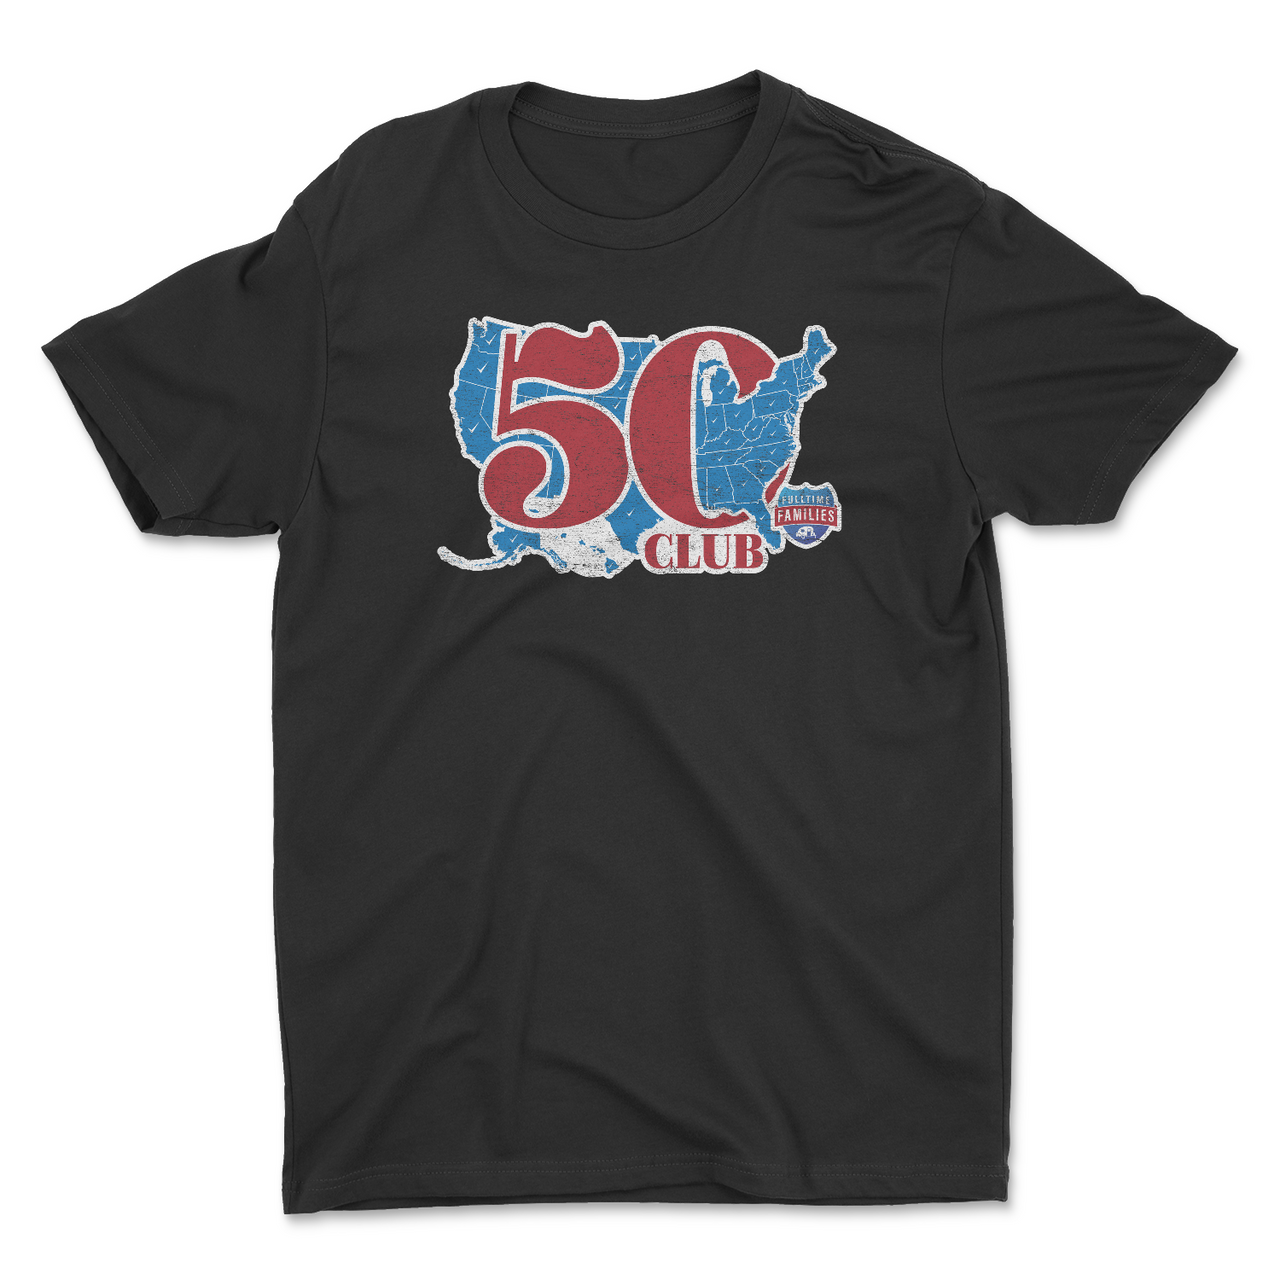 50 States Club Kids Shirt